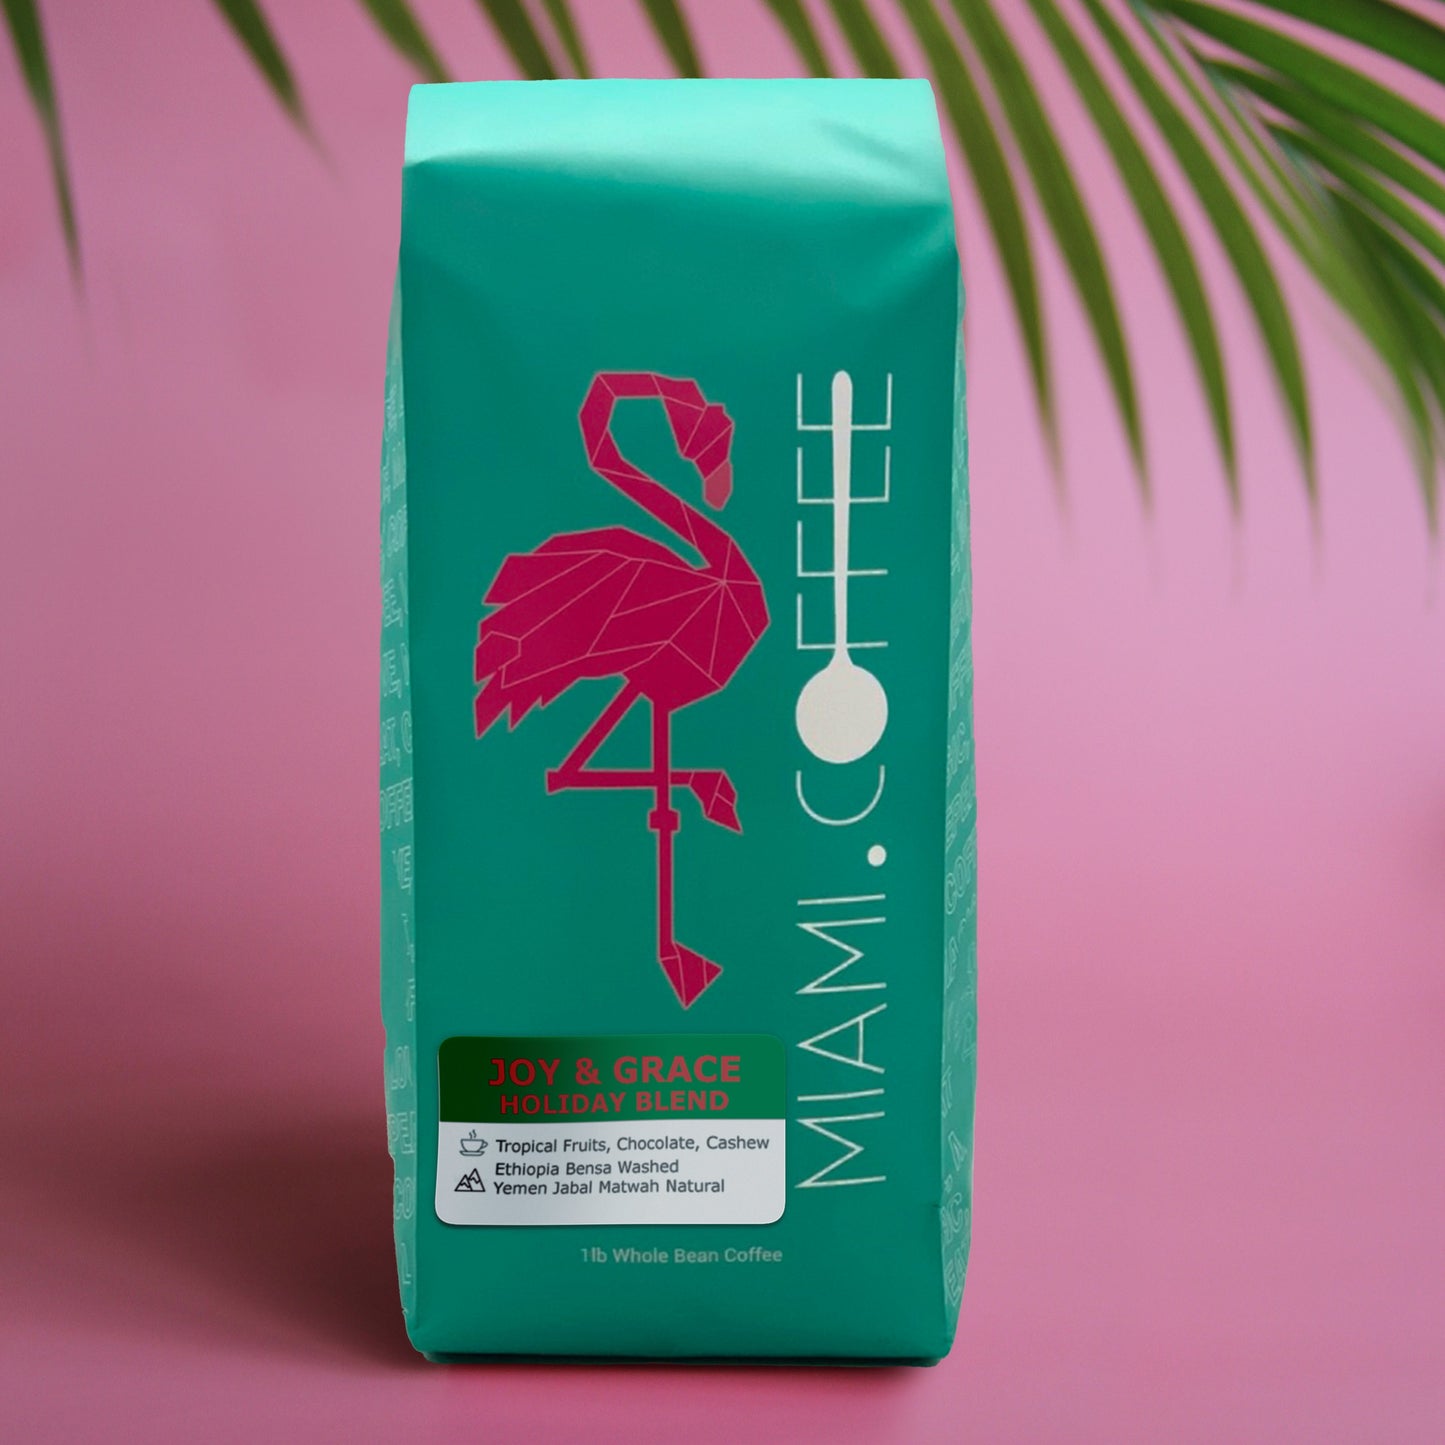 Joy & Grace Holiday Blend 16oz bag by Miami (dot) Coffee. Flavor descriptors: Tropical Fruits, Chocolate, Cashew